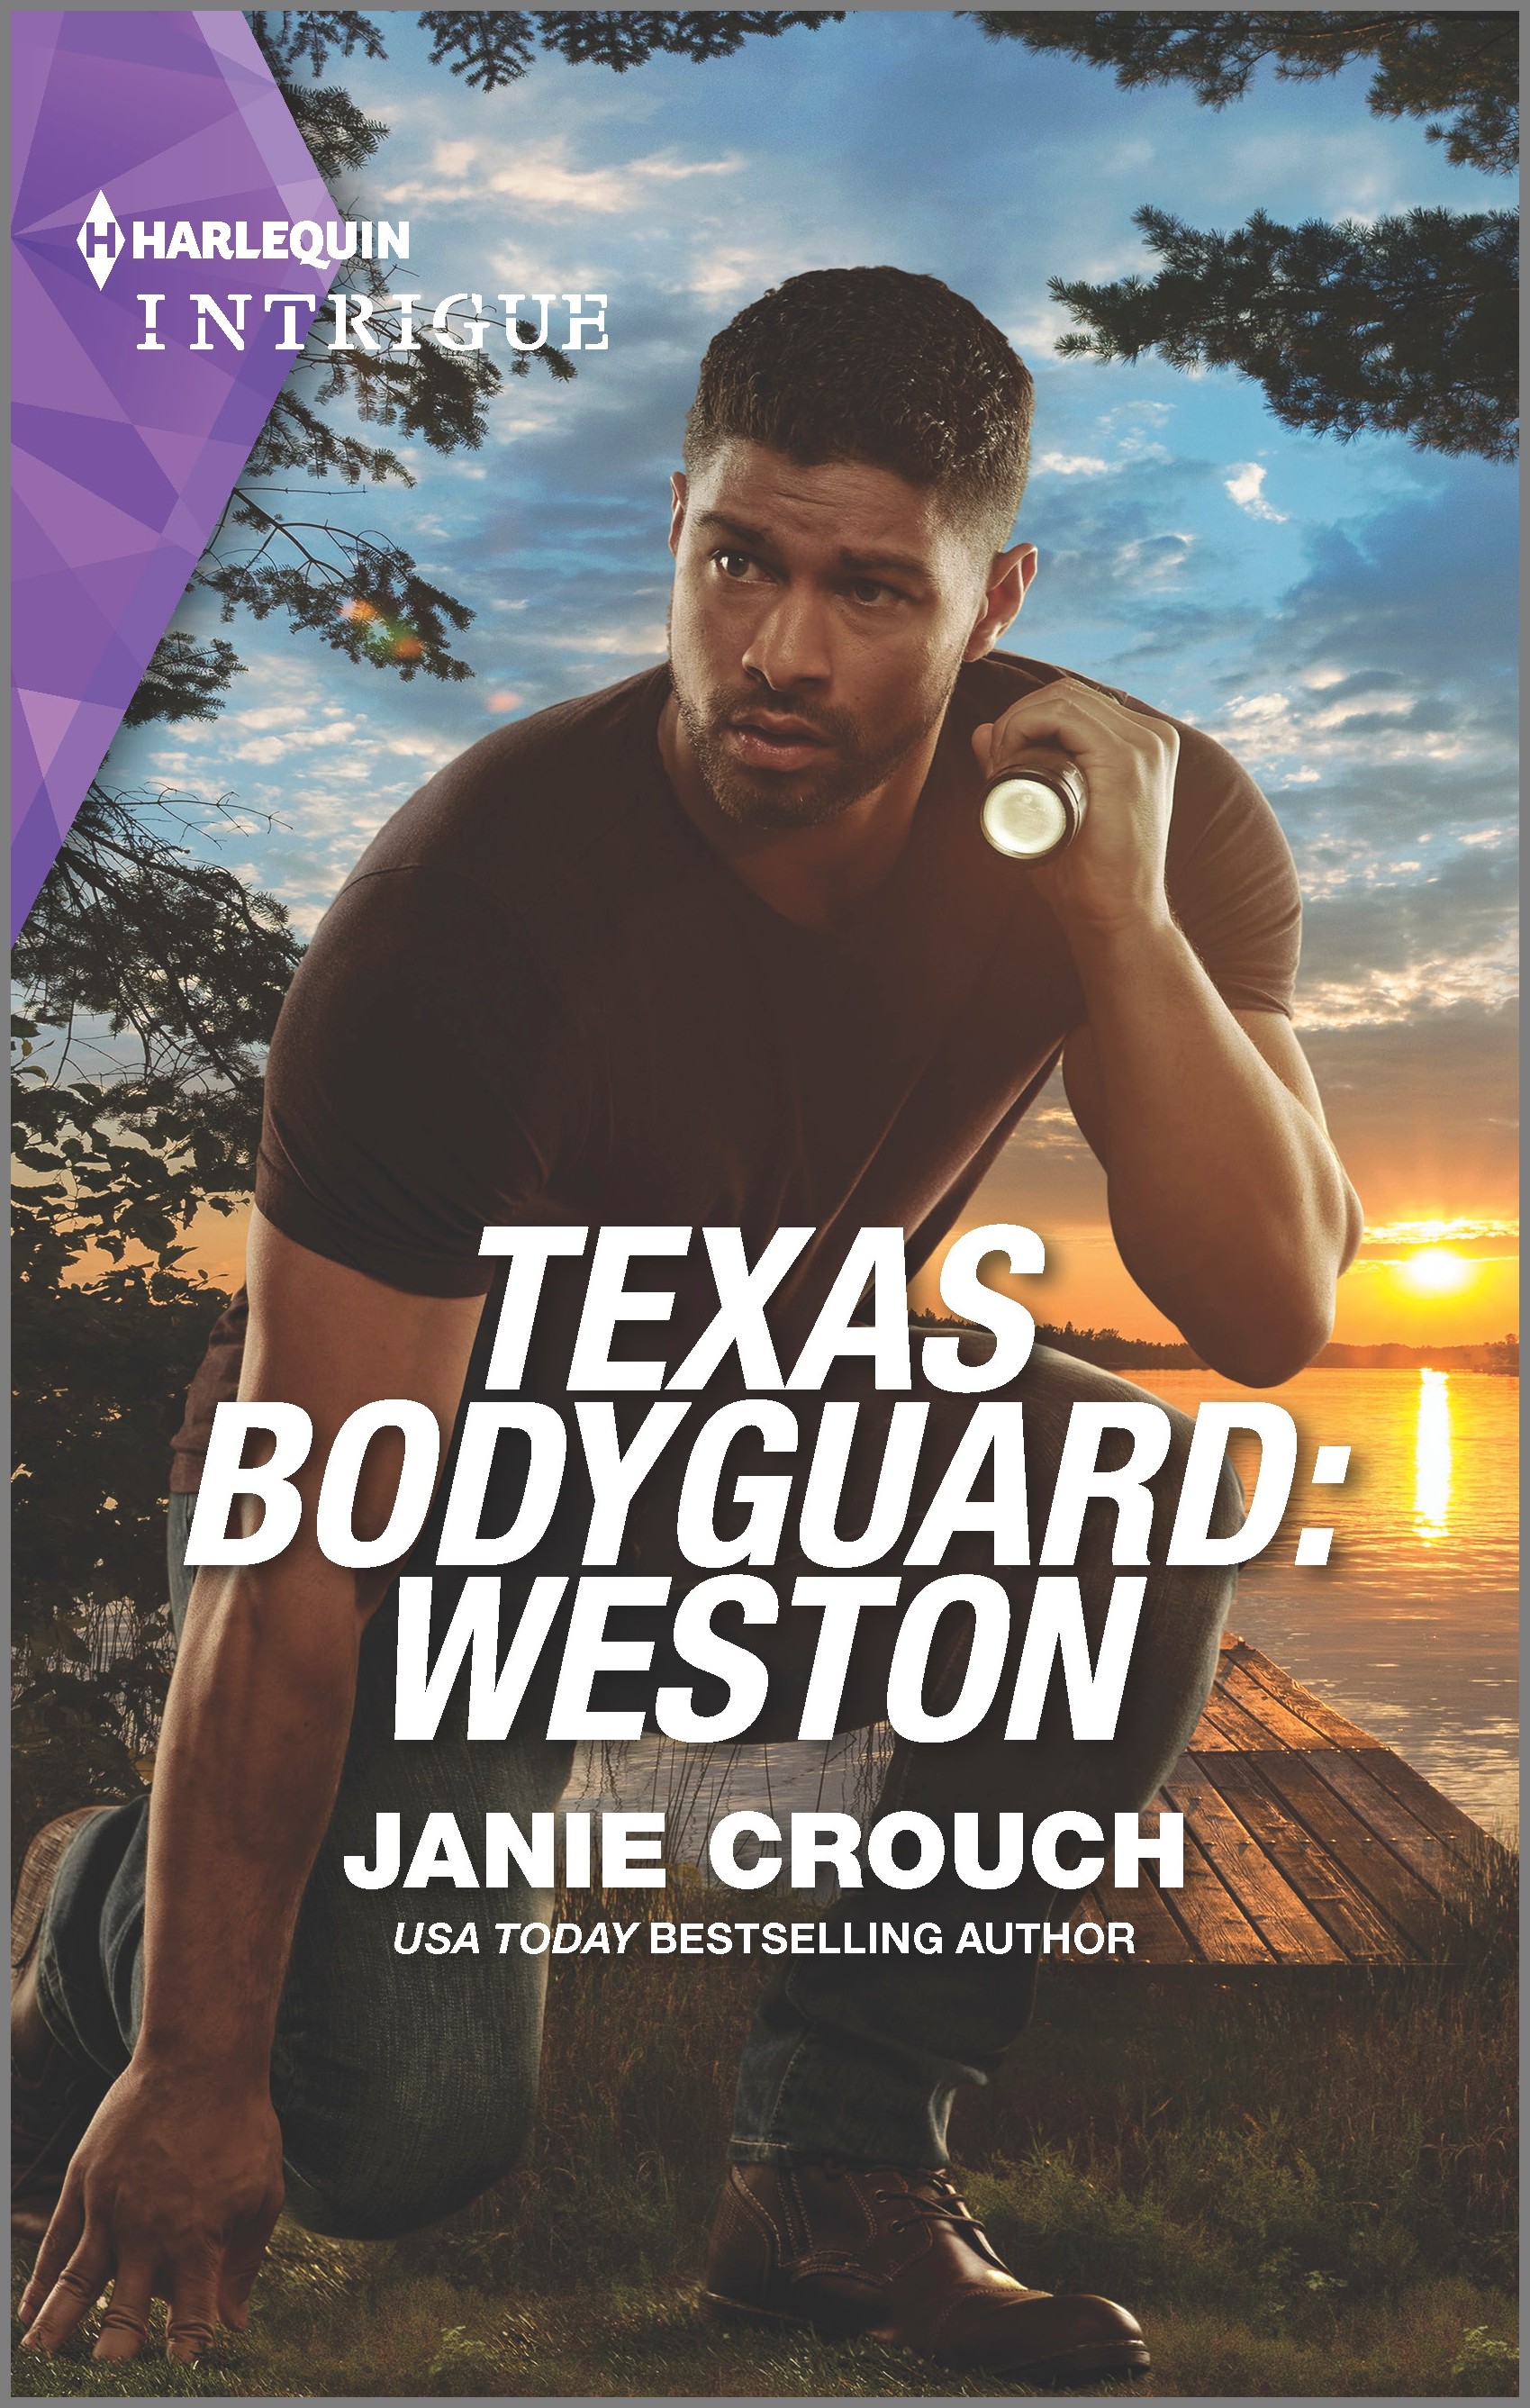 Texas Bodyguard: Weston by Janie Crouch